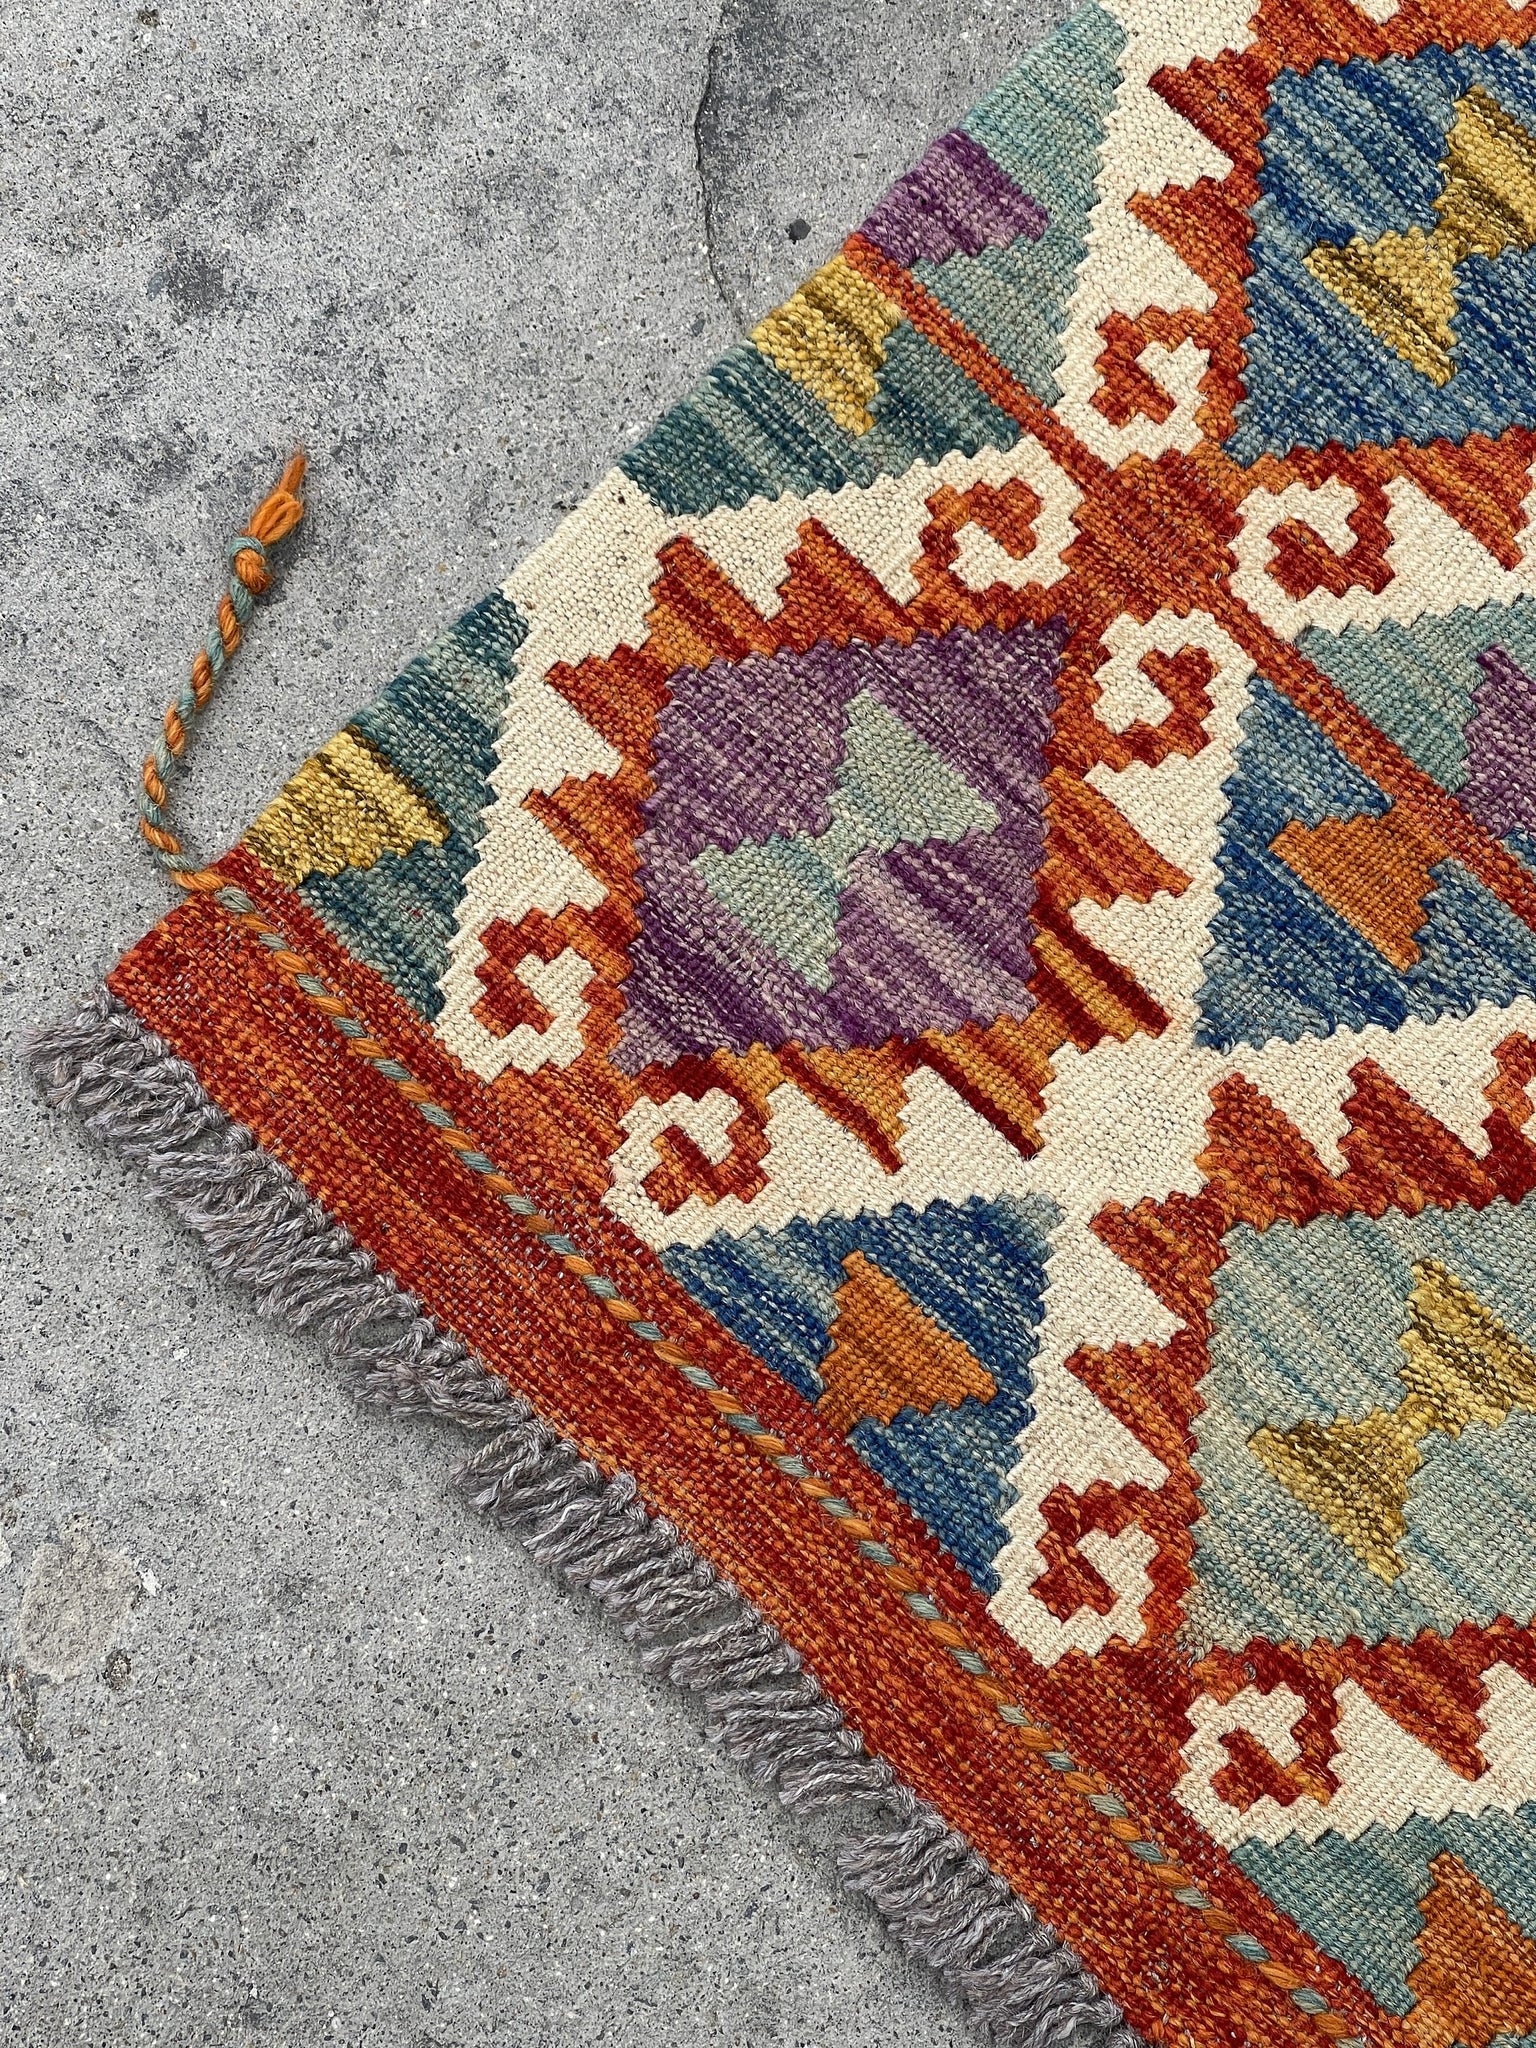 3x13 (90x395) Handmade Afghan Kilim Rug Runner | Blue Sage Green Ivory Cream Orange Purple | Flatweave Flat Weave Tribal Oriental Boho Wool